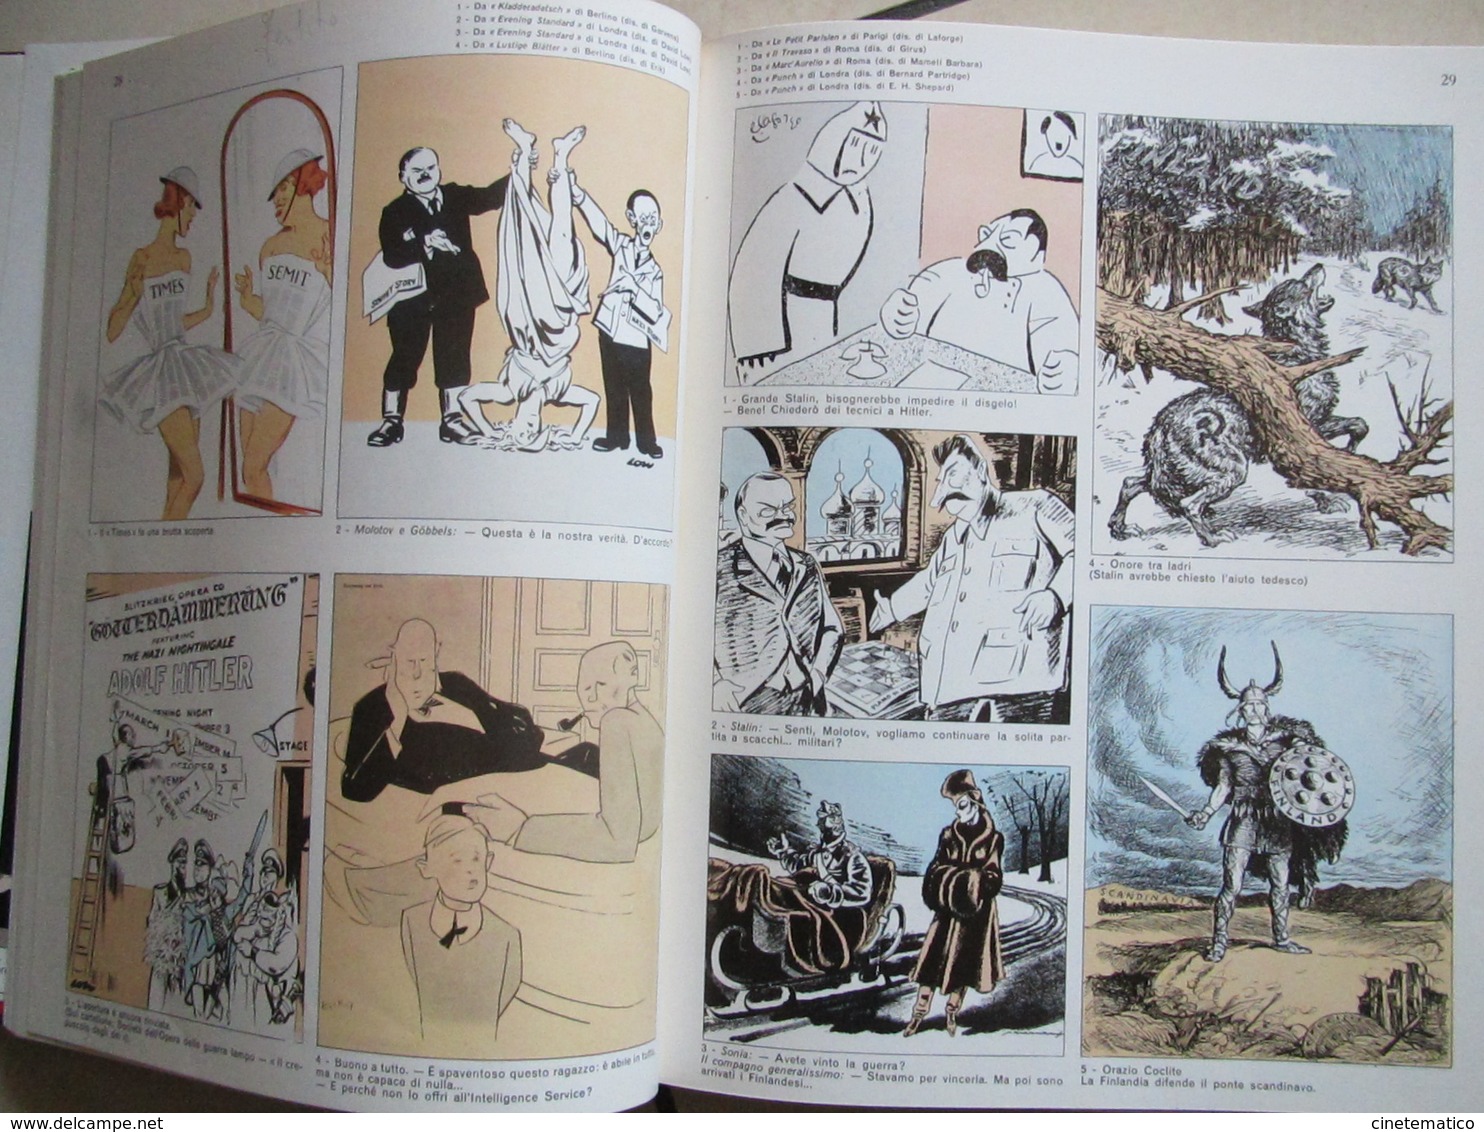 Libro/book/livre/buch "La Caricatura Internazionale Durante La Seconda Guerra Mondiale" - Oorlog 1939-45